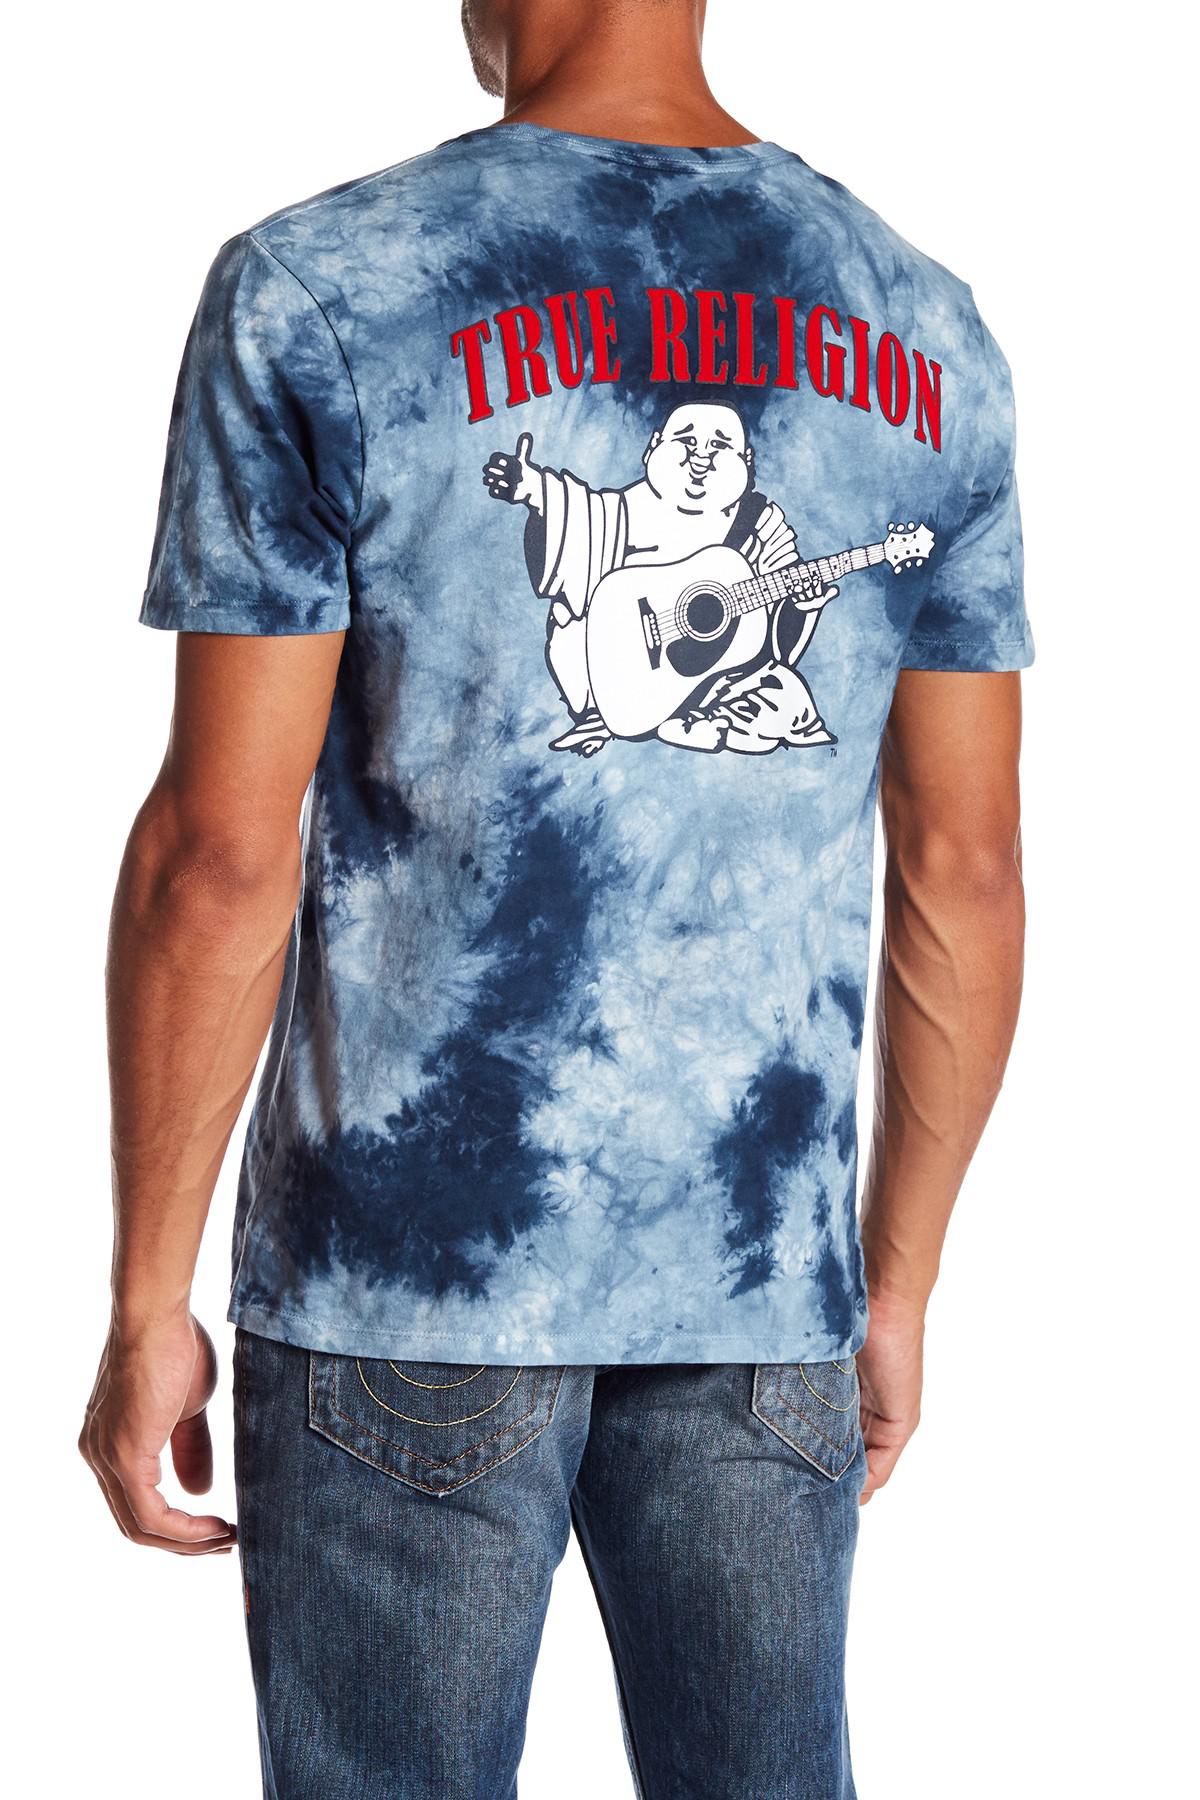 true religion big buddha t shirt